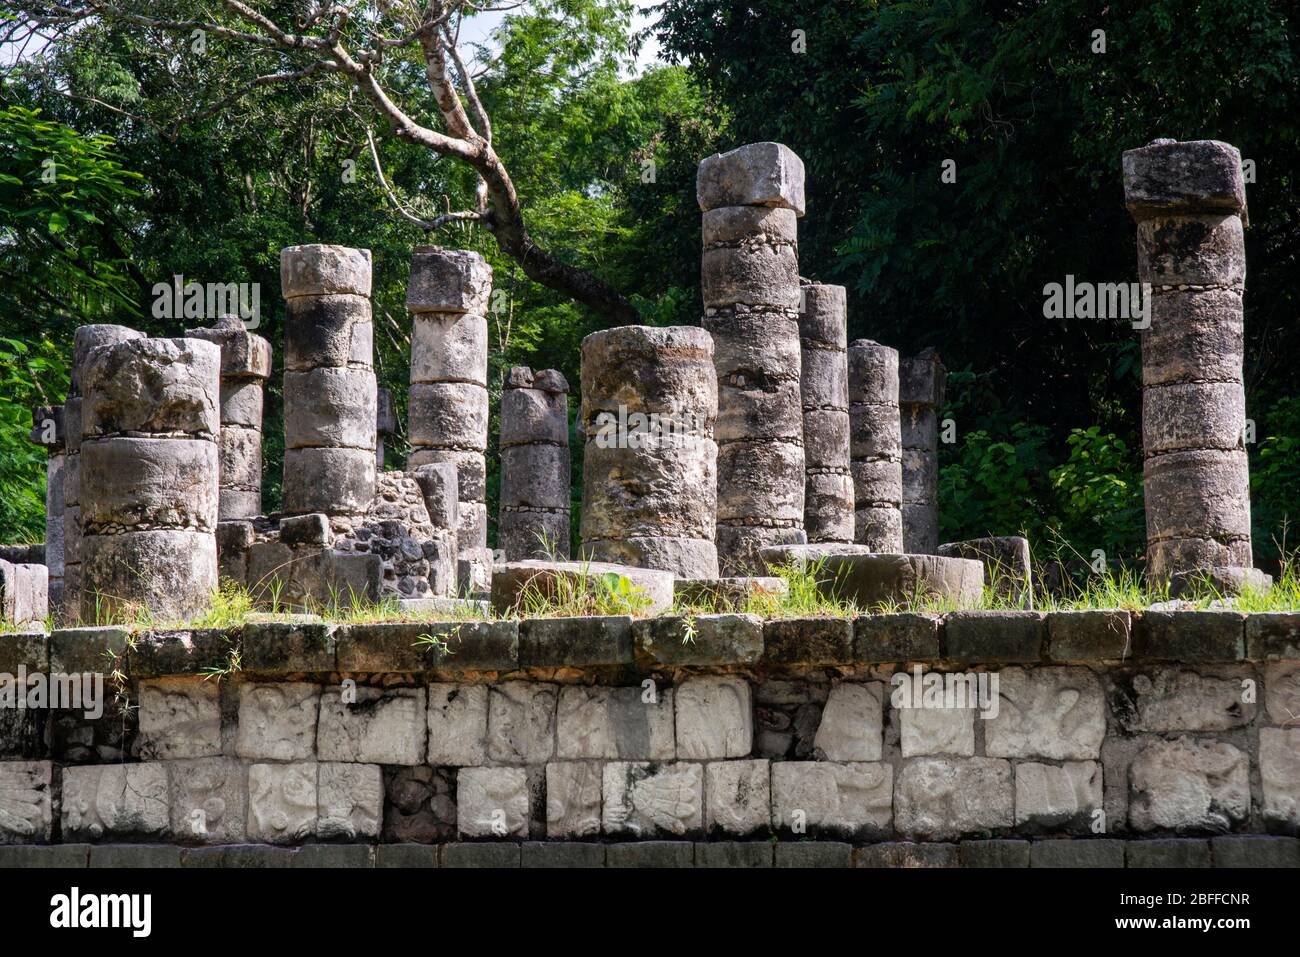 The Plaza of a Thousand Columns in the UNESCO Mayan Ruin of Chichen Itza Archaeological Site Yucatan Peninsula, Quintana Roo, Caribbean Coast, Mexico Stock Photo